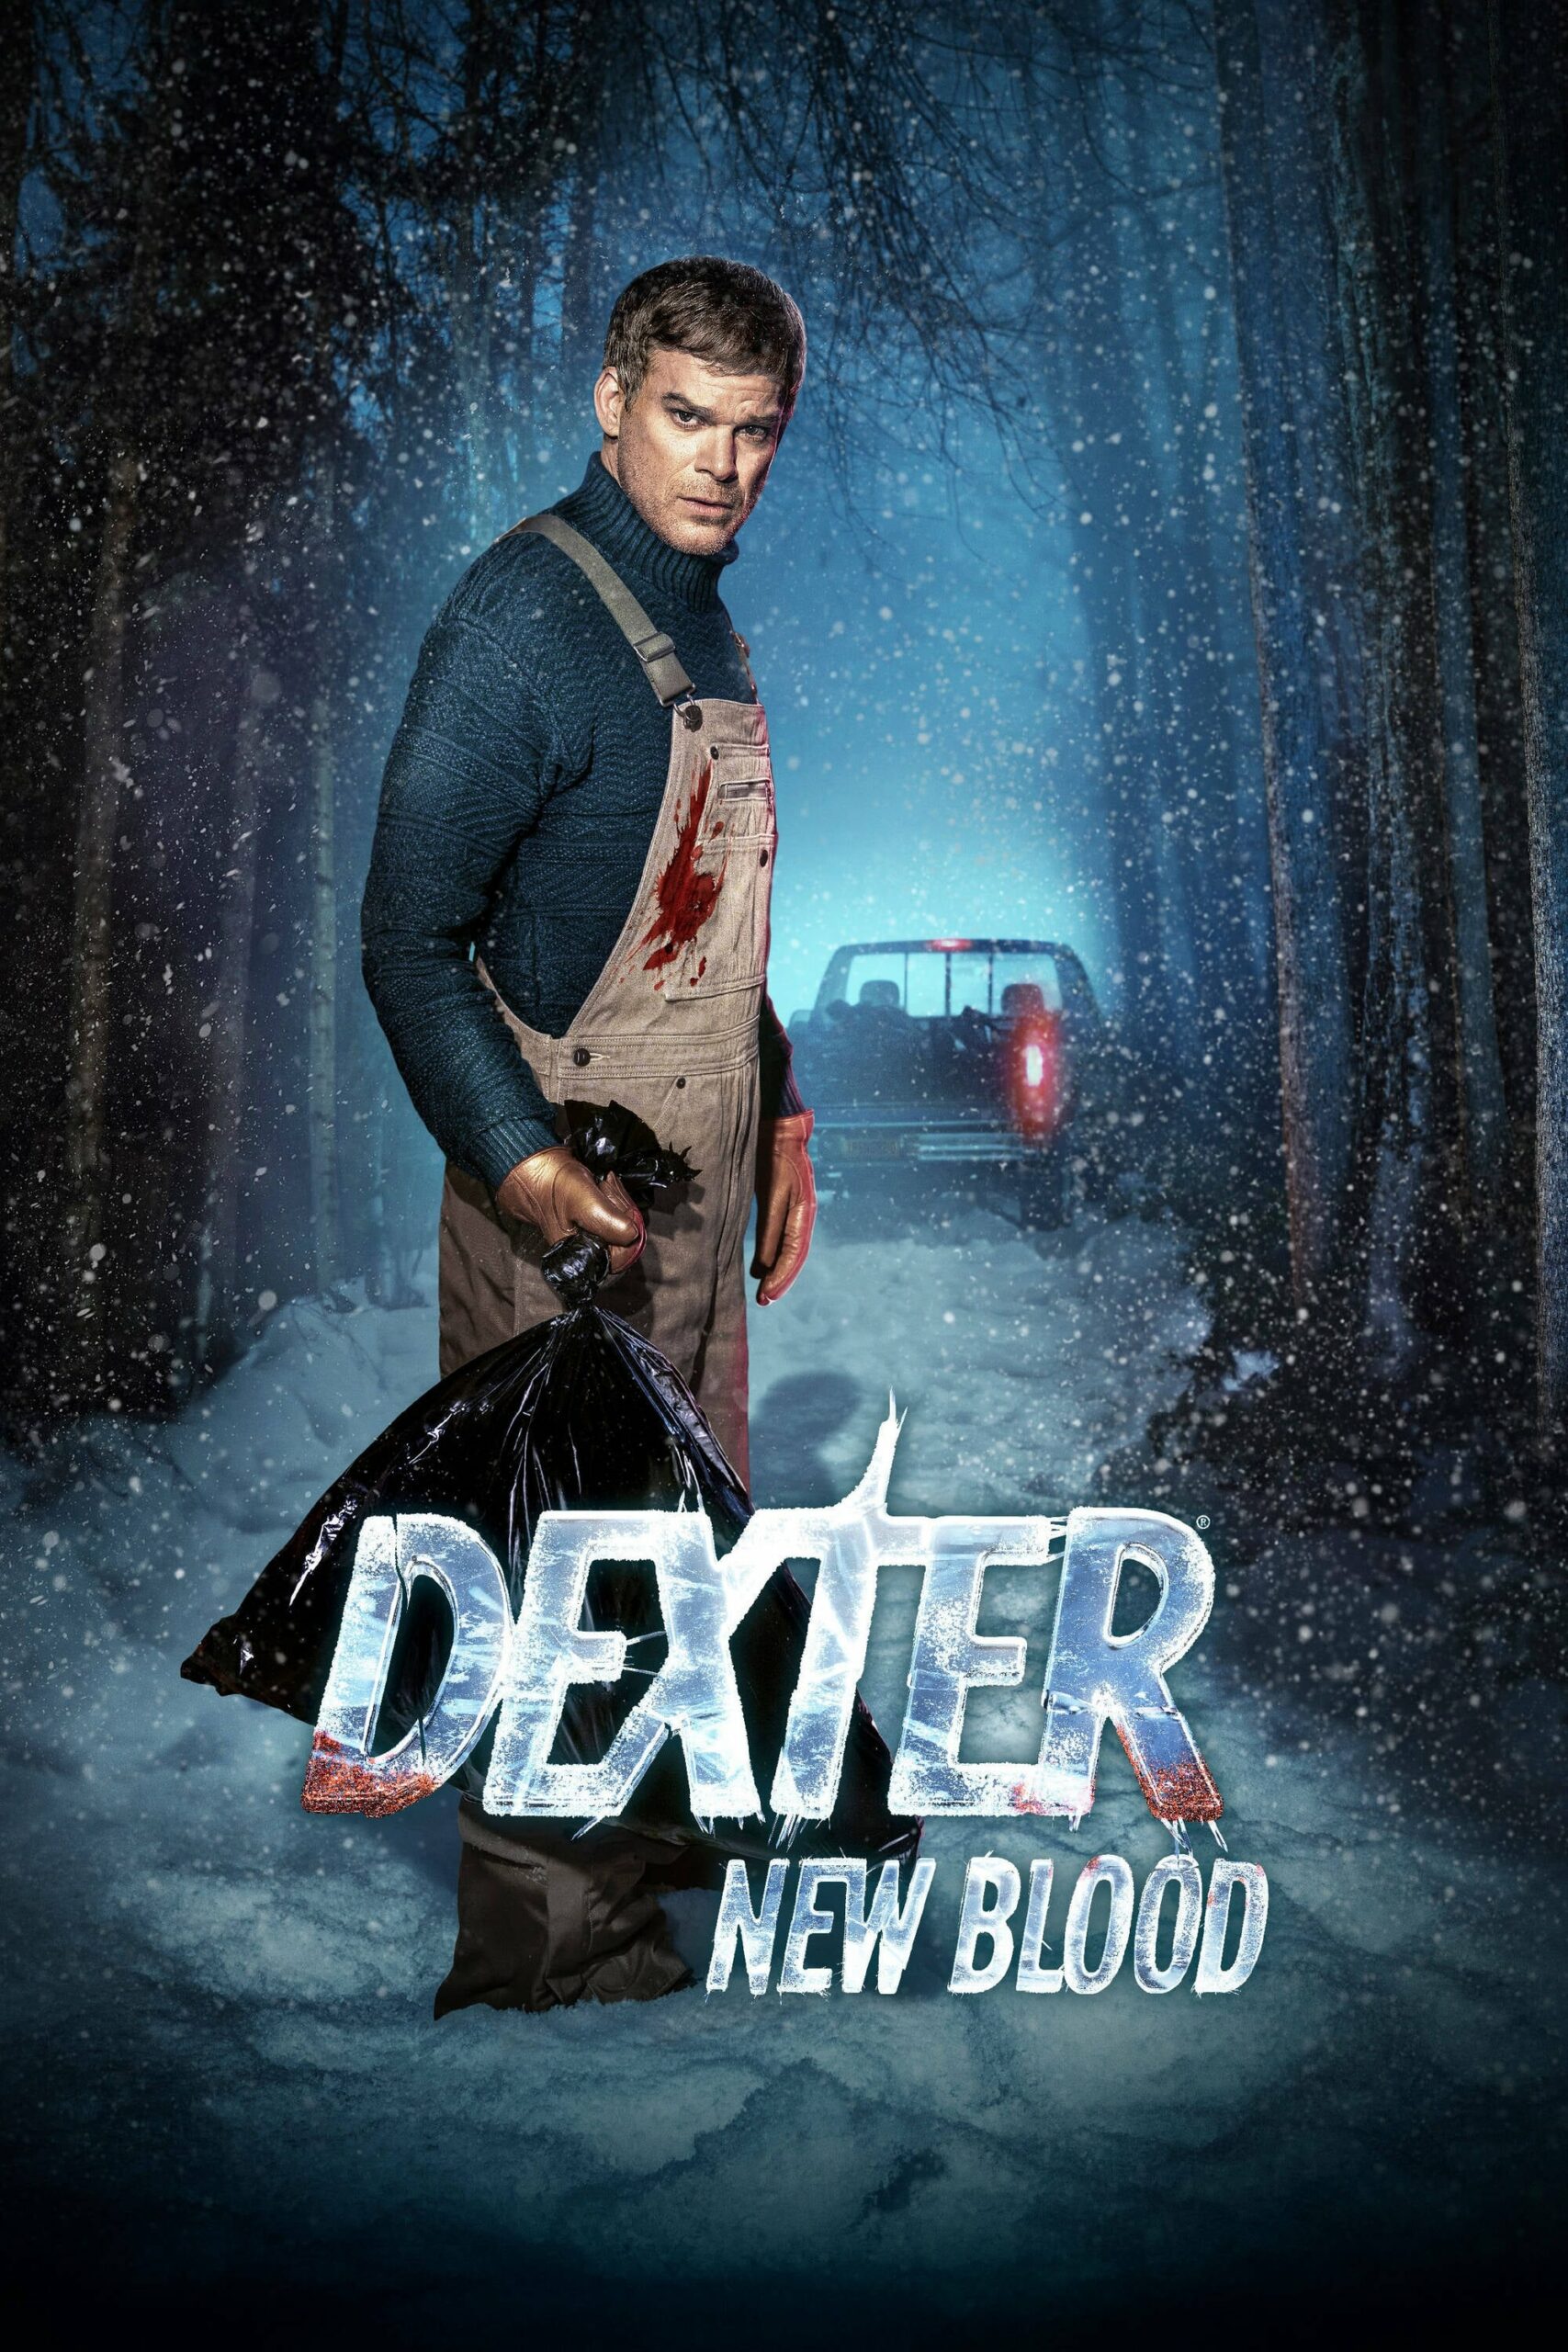 Plakát pro film “Dexter – New Blood”